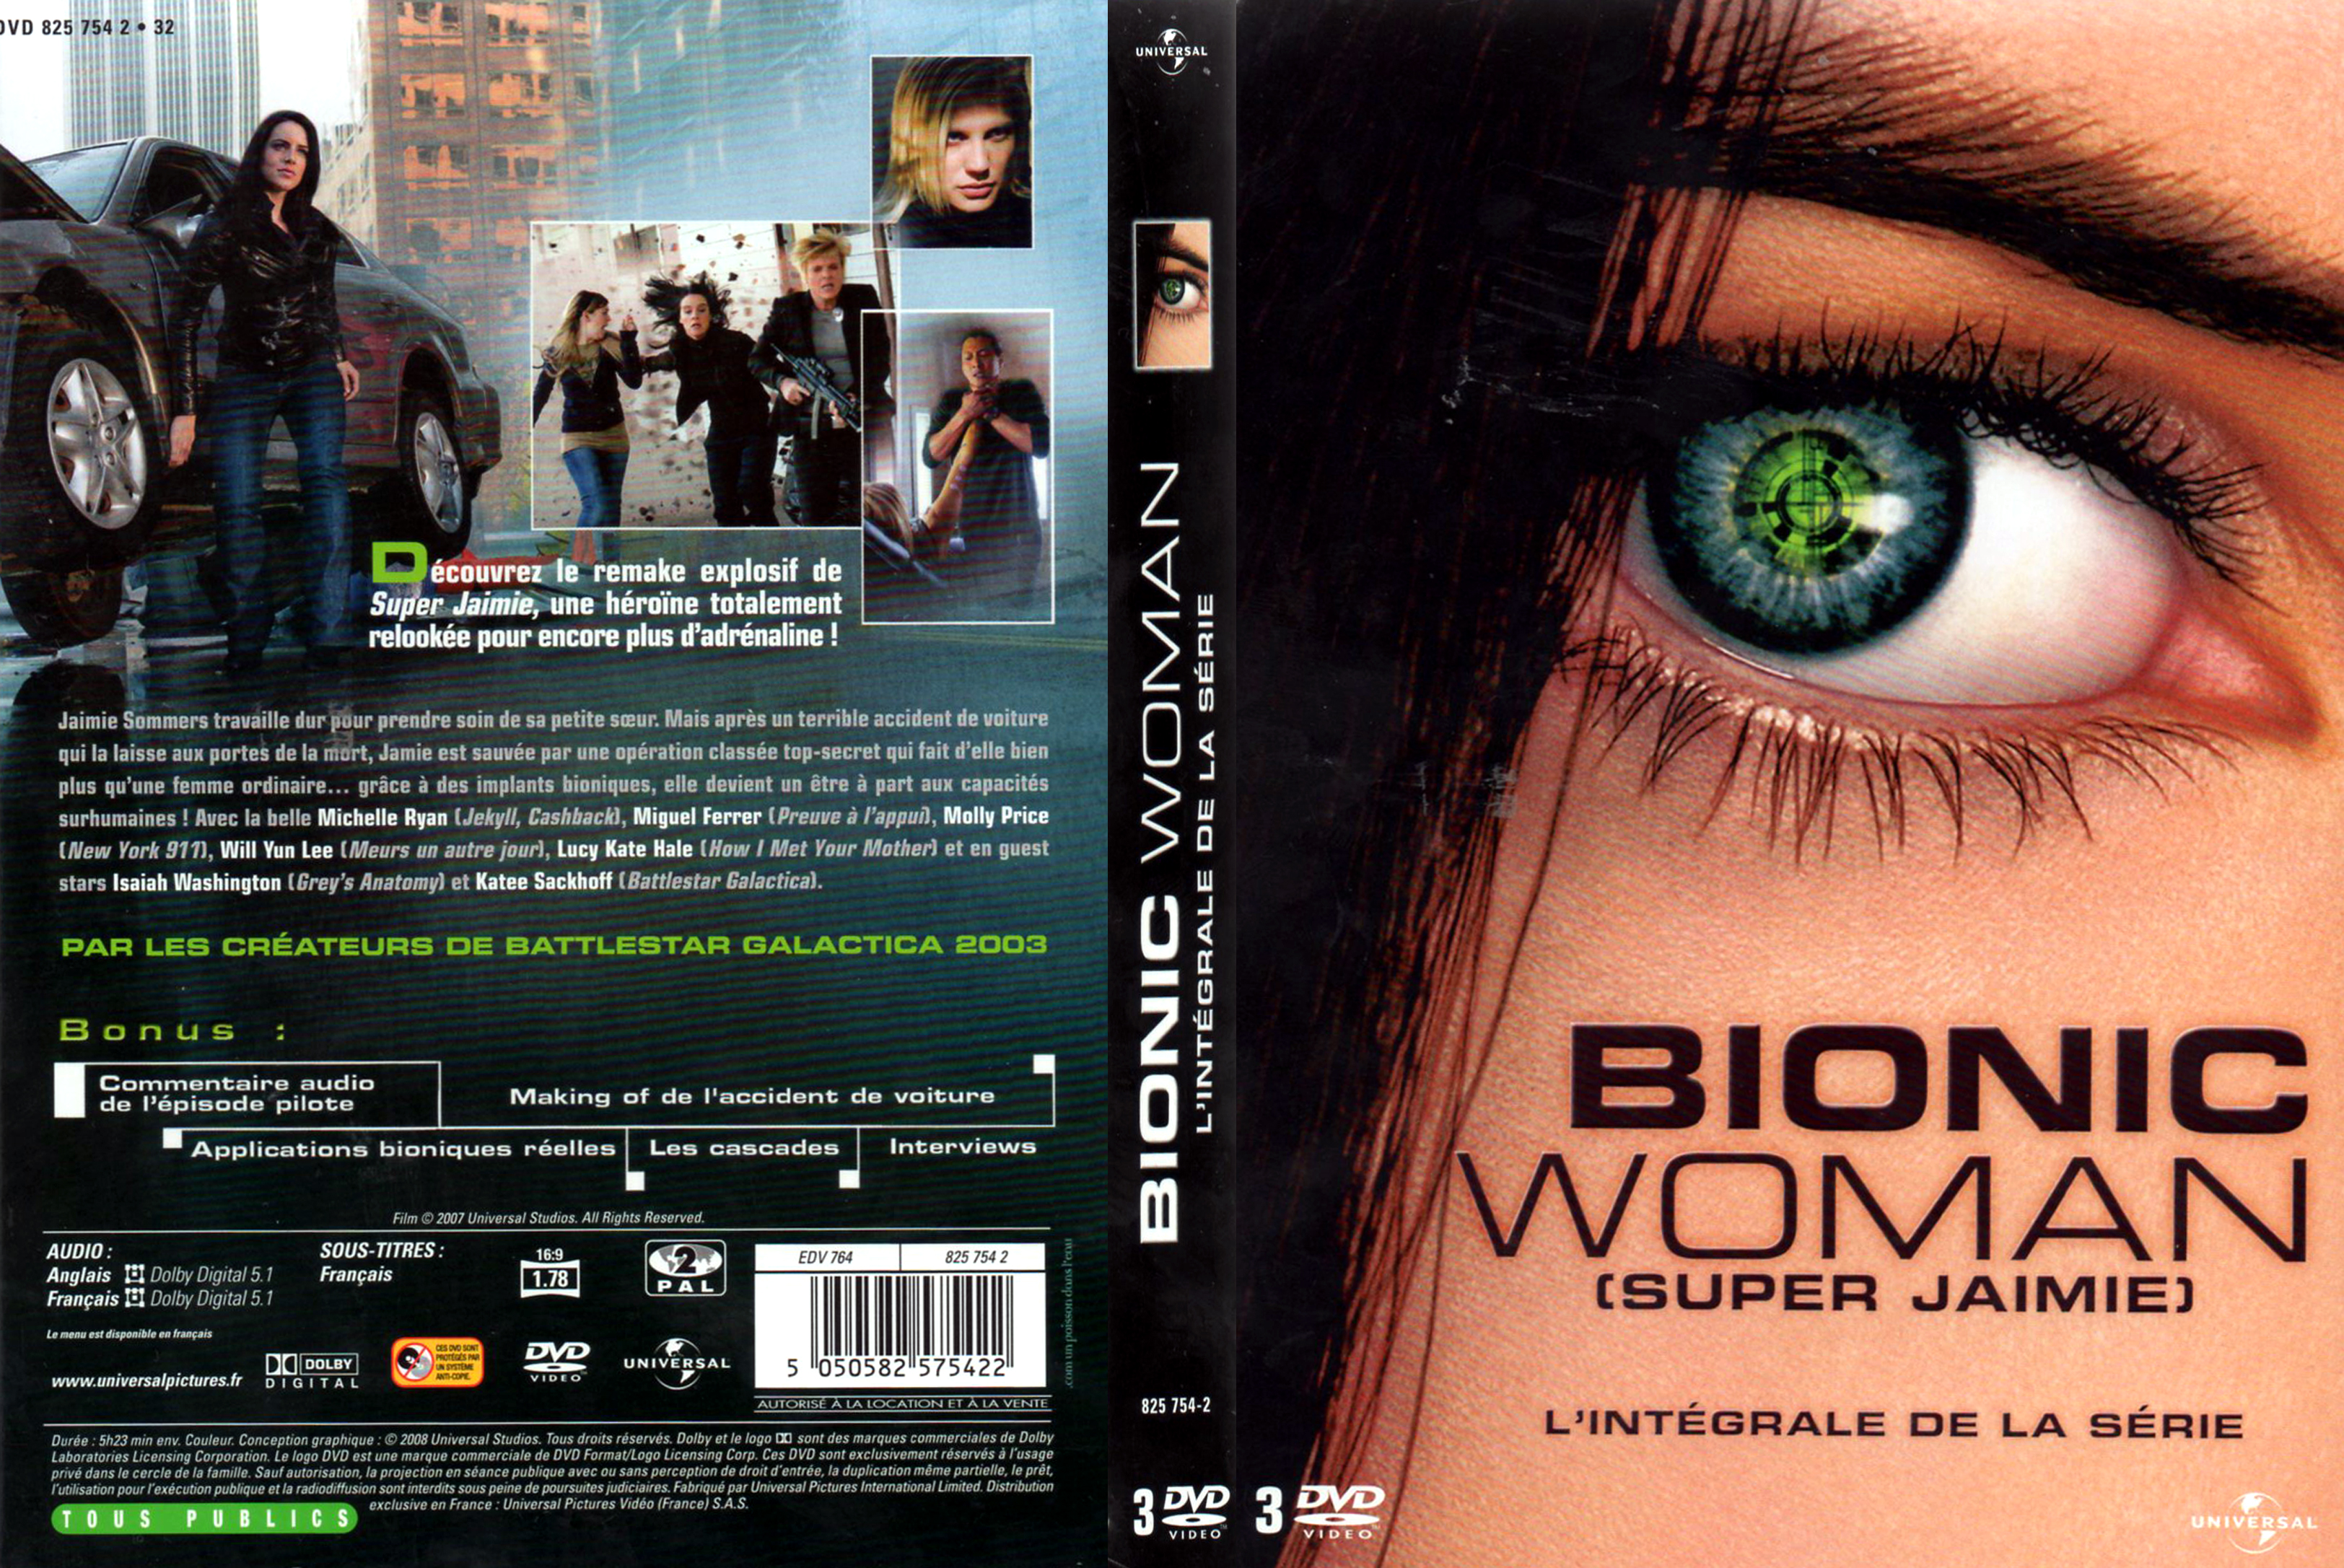 Jaquette DVD Bionic Woman Integrale